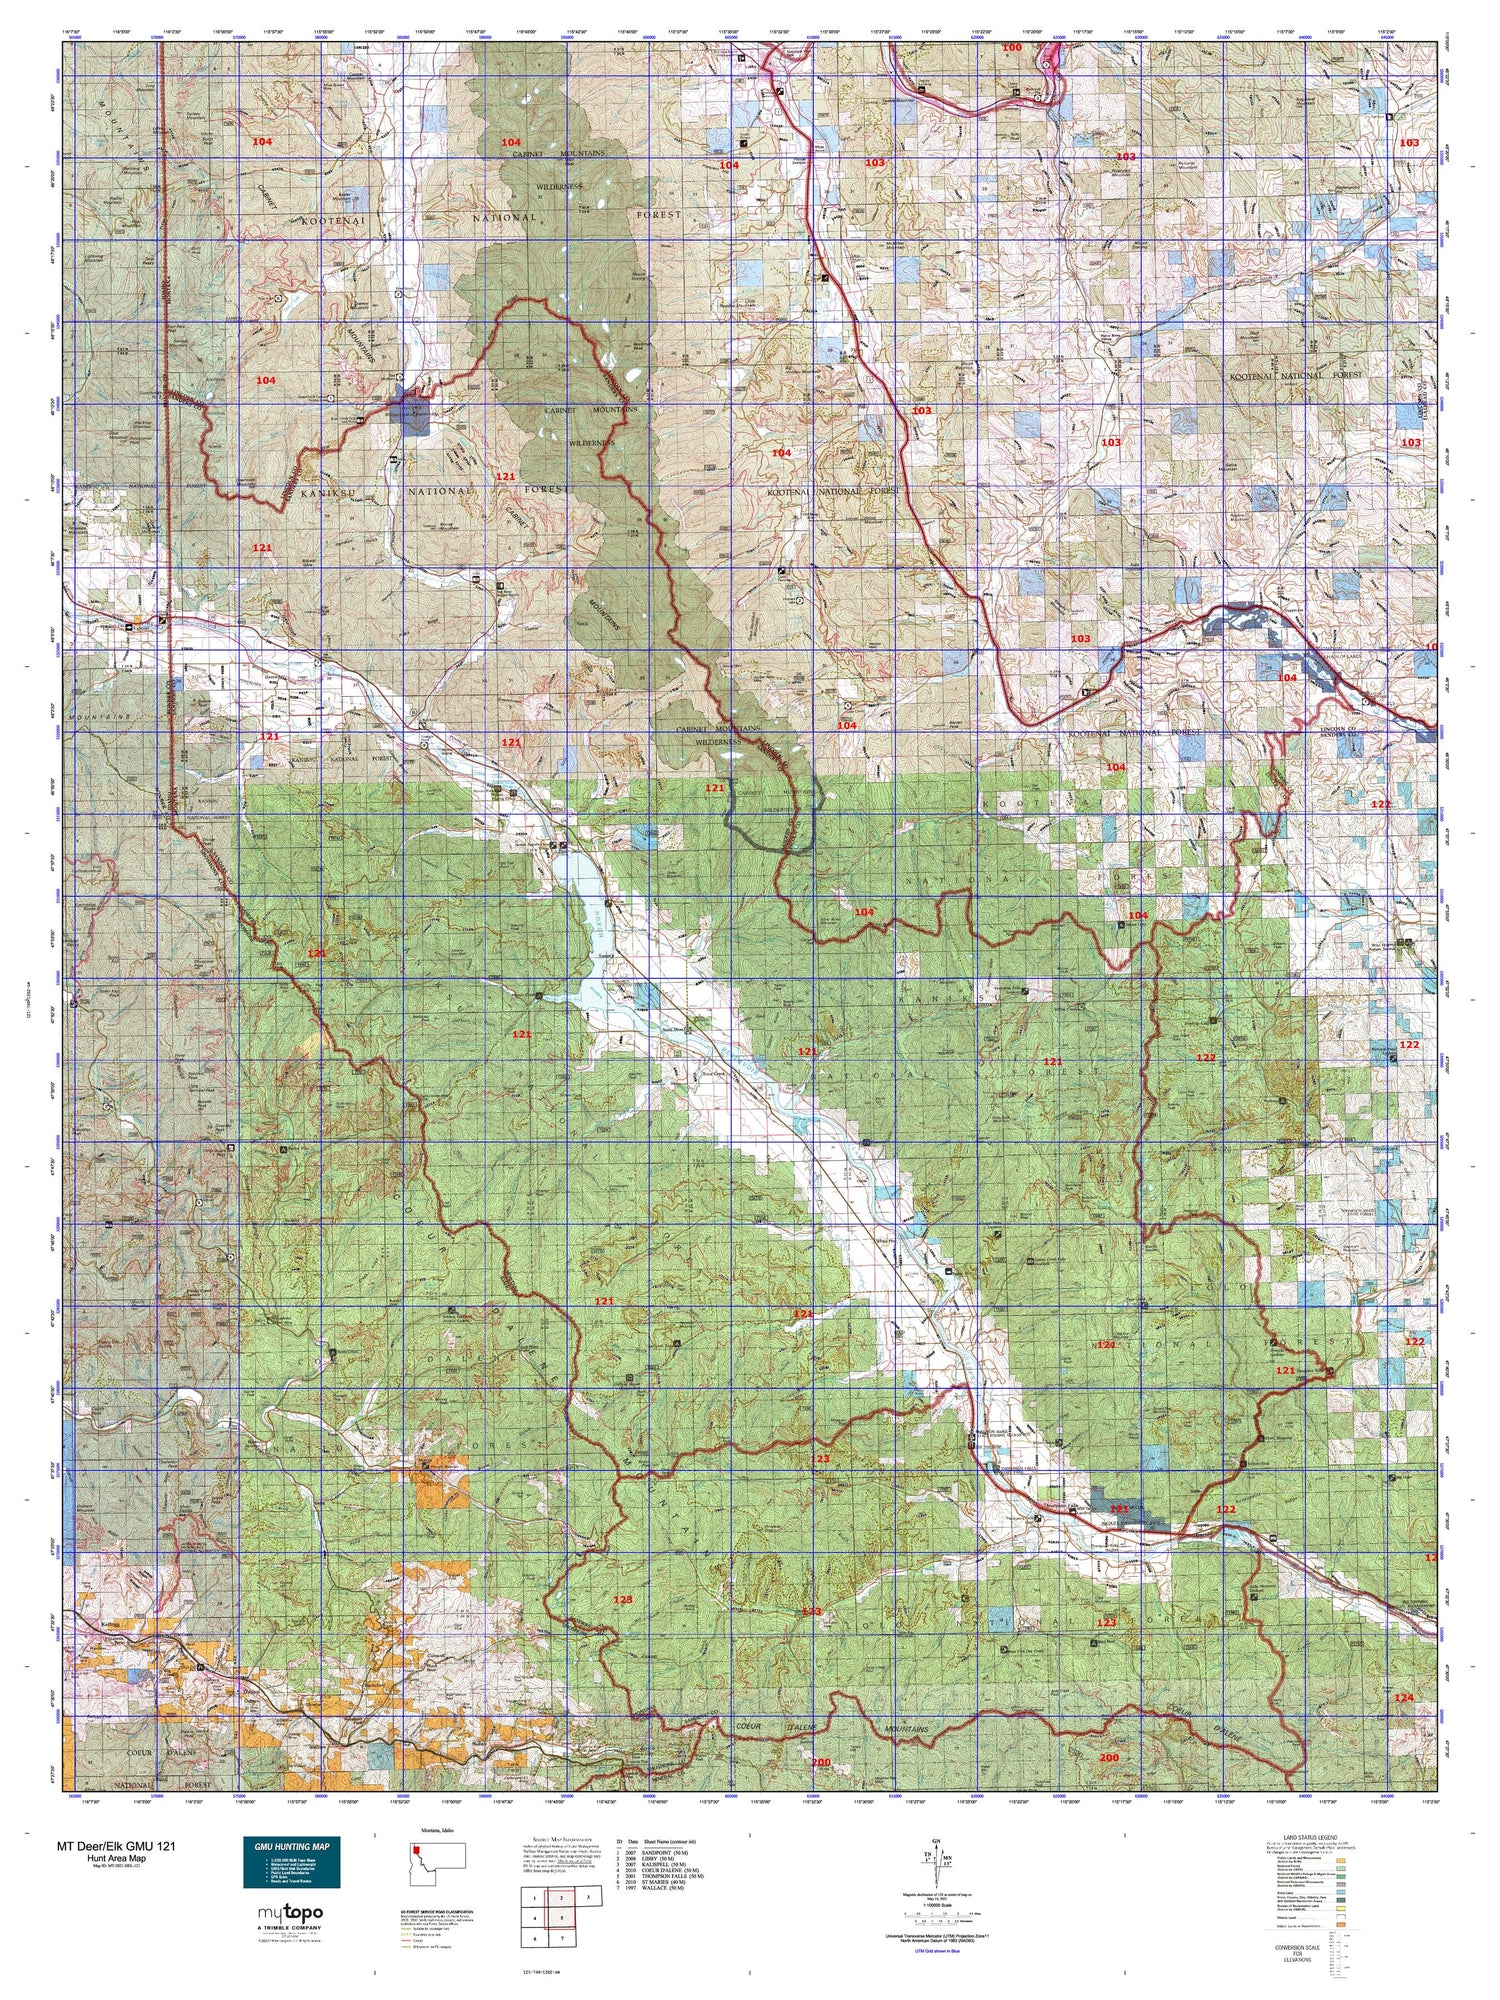 Montana Deer/Elk GMU 121 Map Image